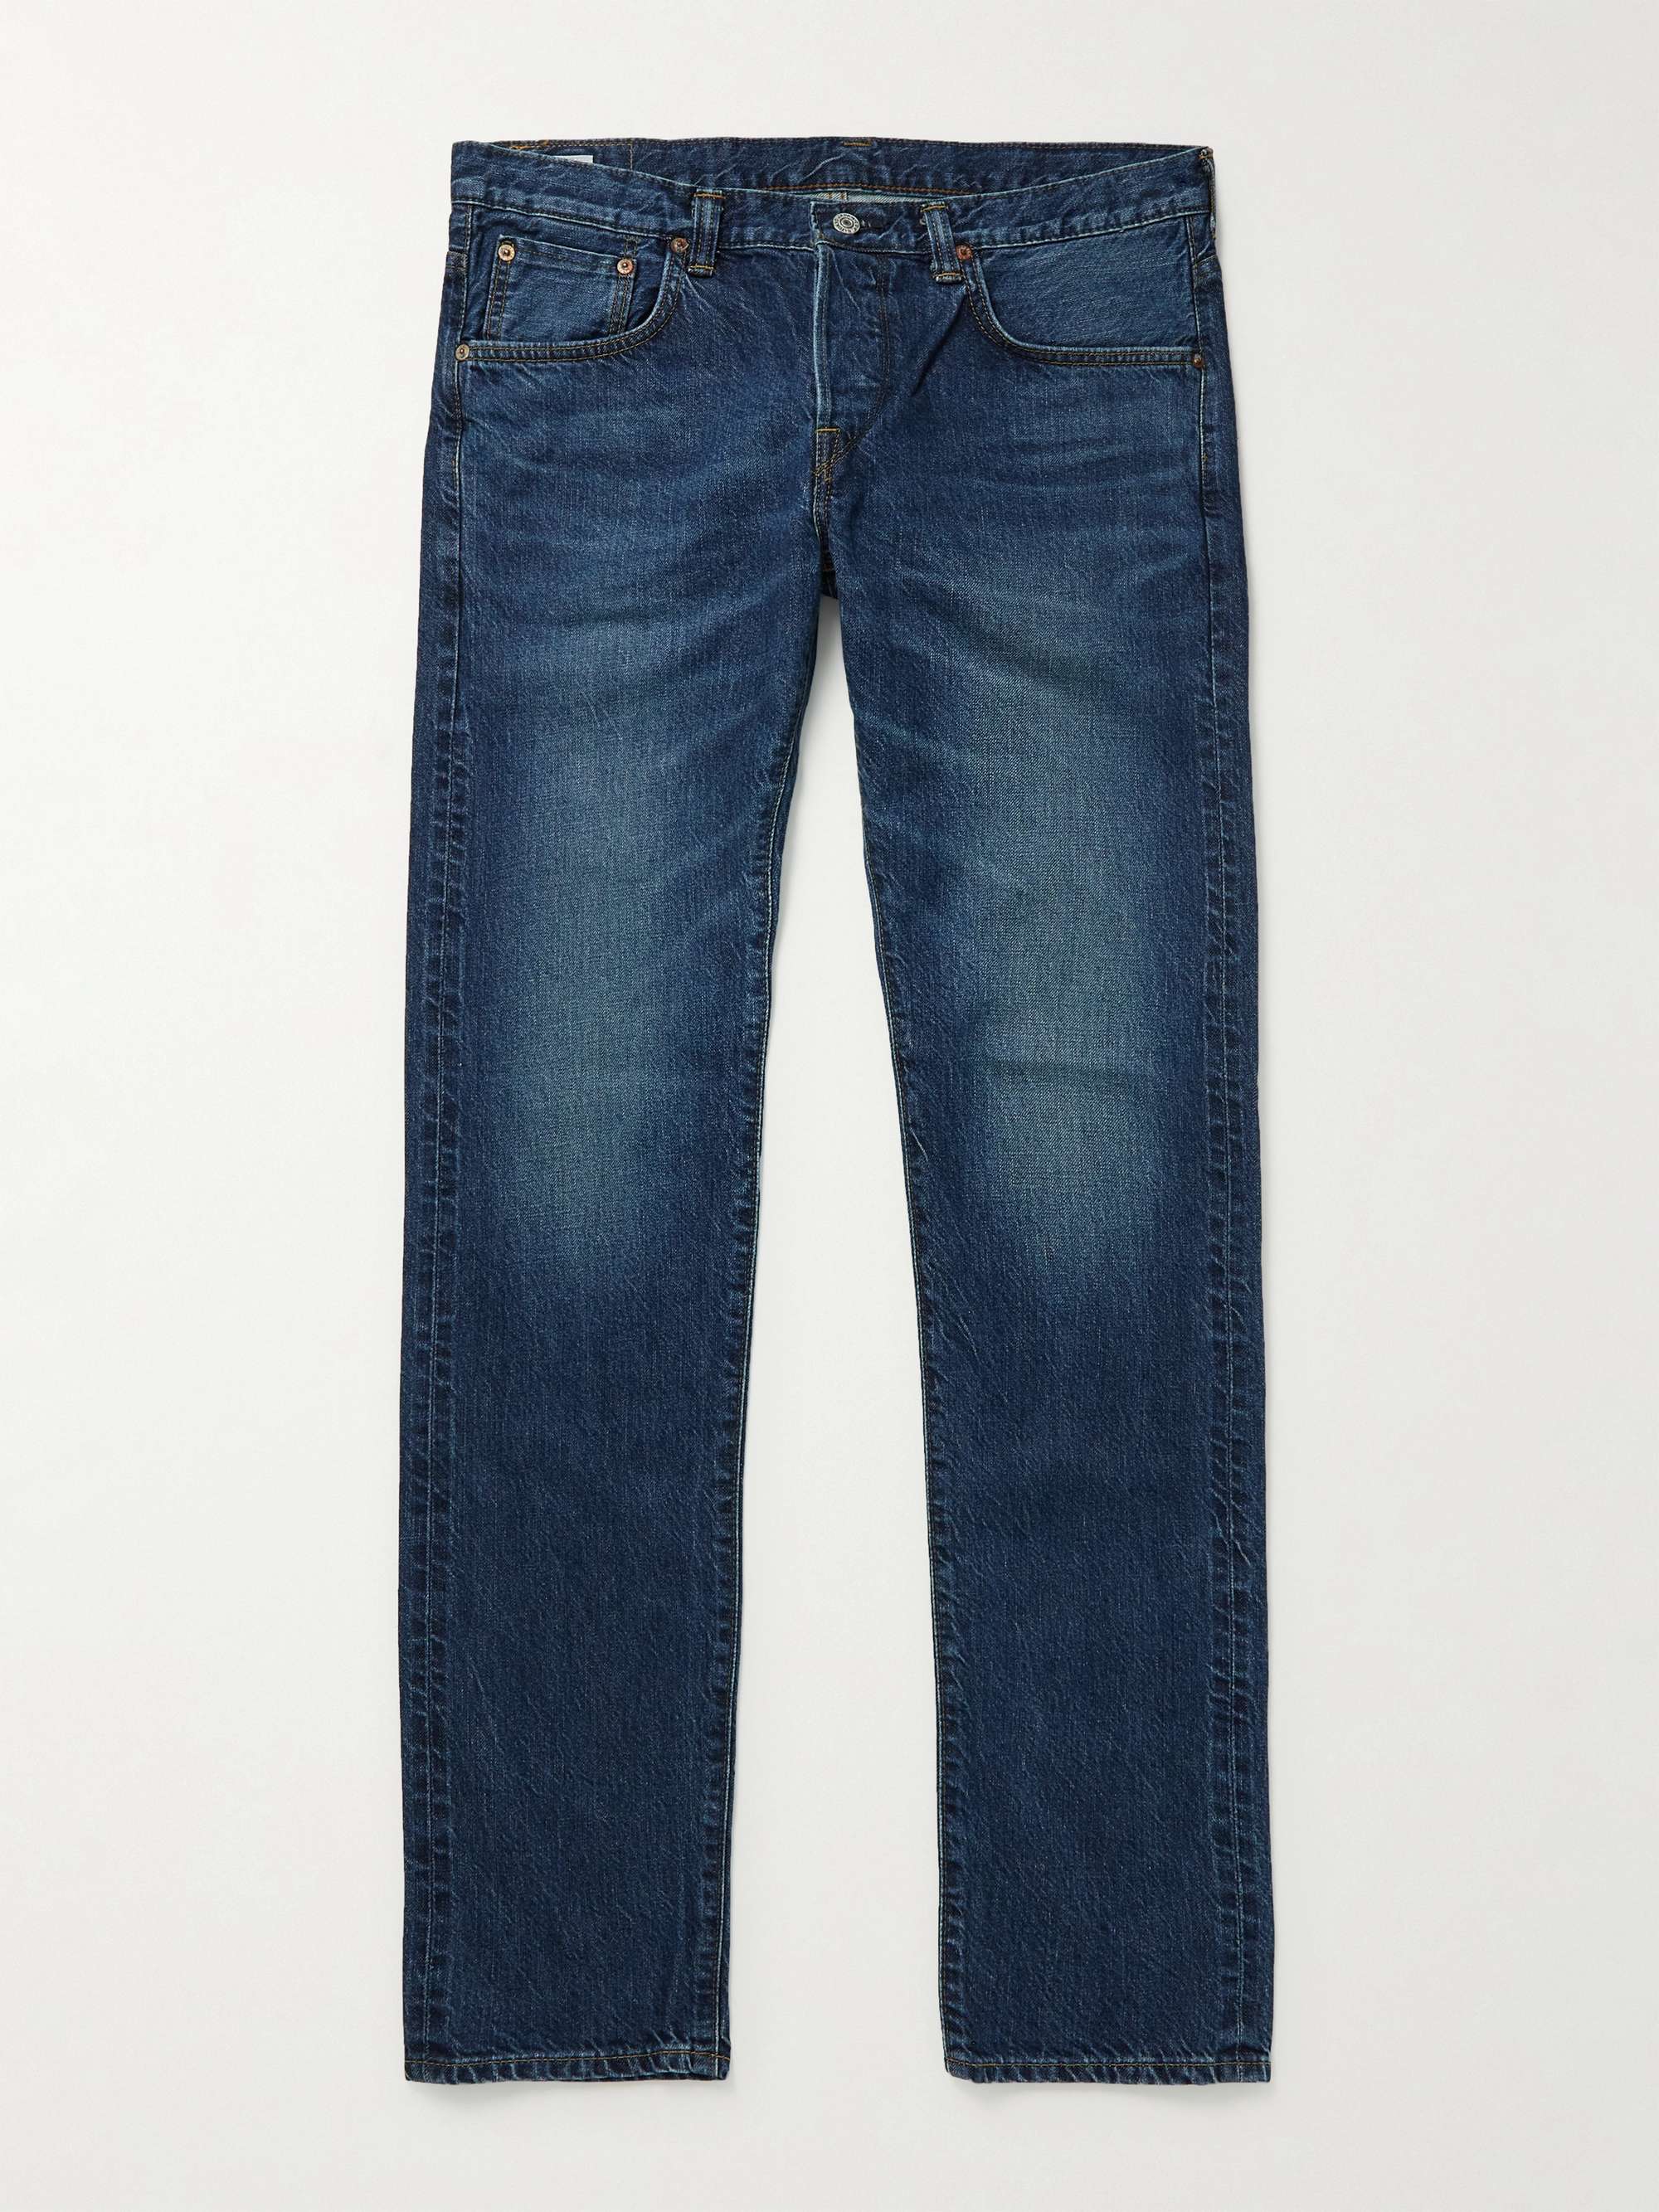 EDWIN Slim-Fit Selvedge Jeans